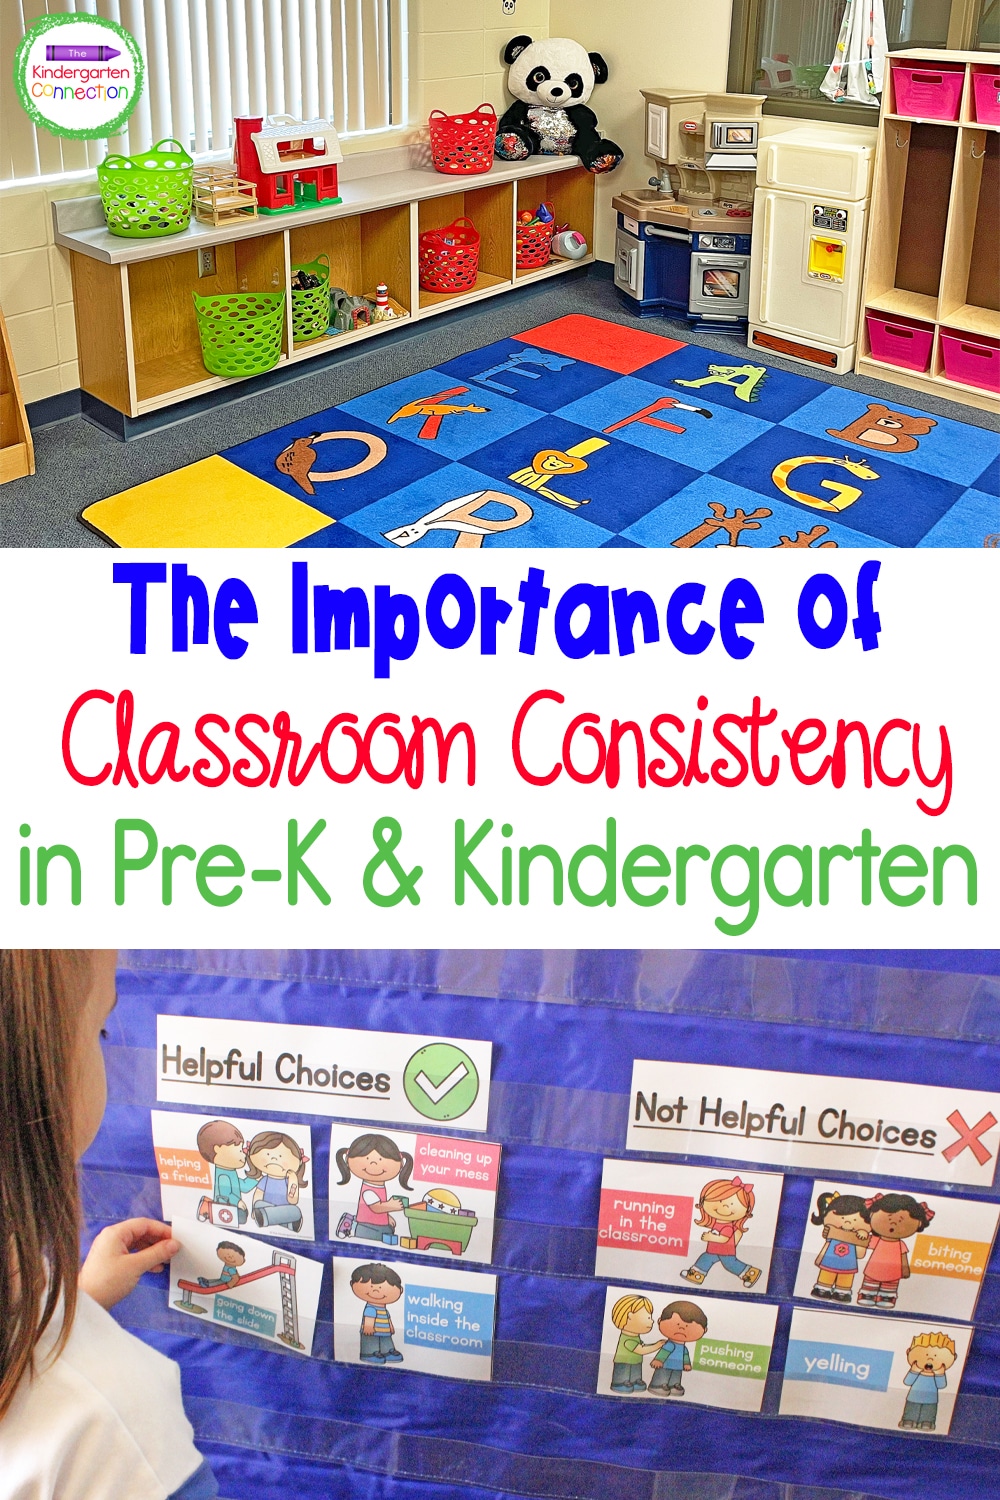 The Importance of Classroom Consistency in Pre-K & Kindergarten